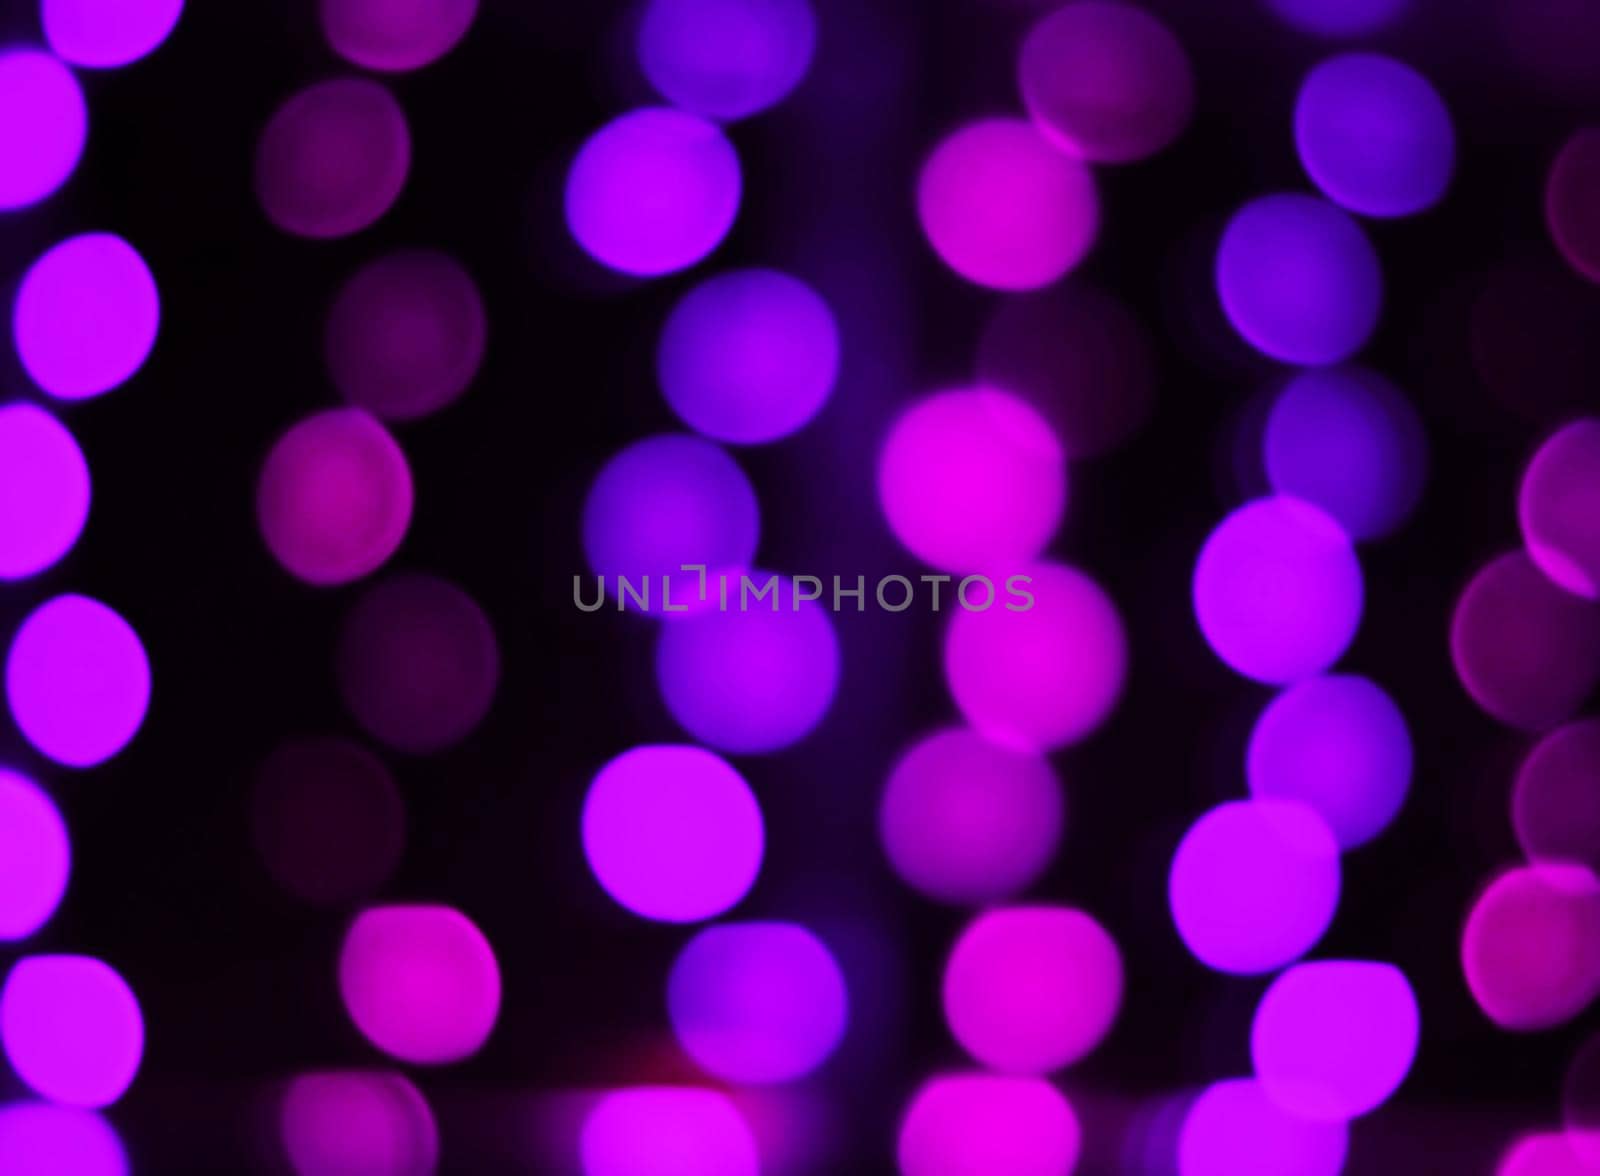 blurred image of purple lights on a black background.festive background